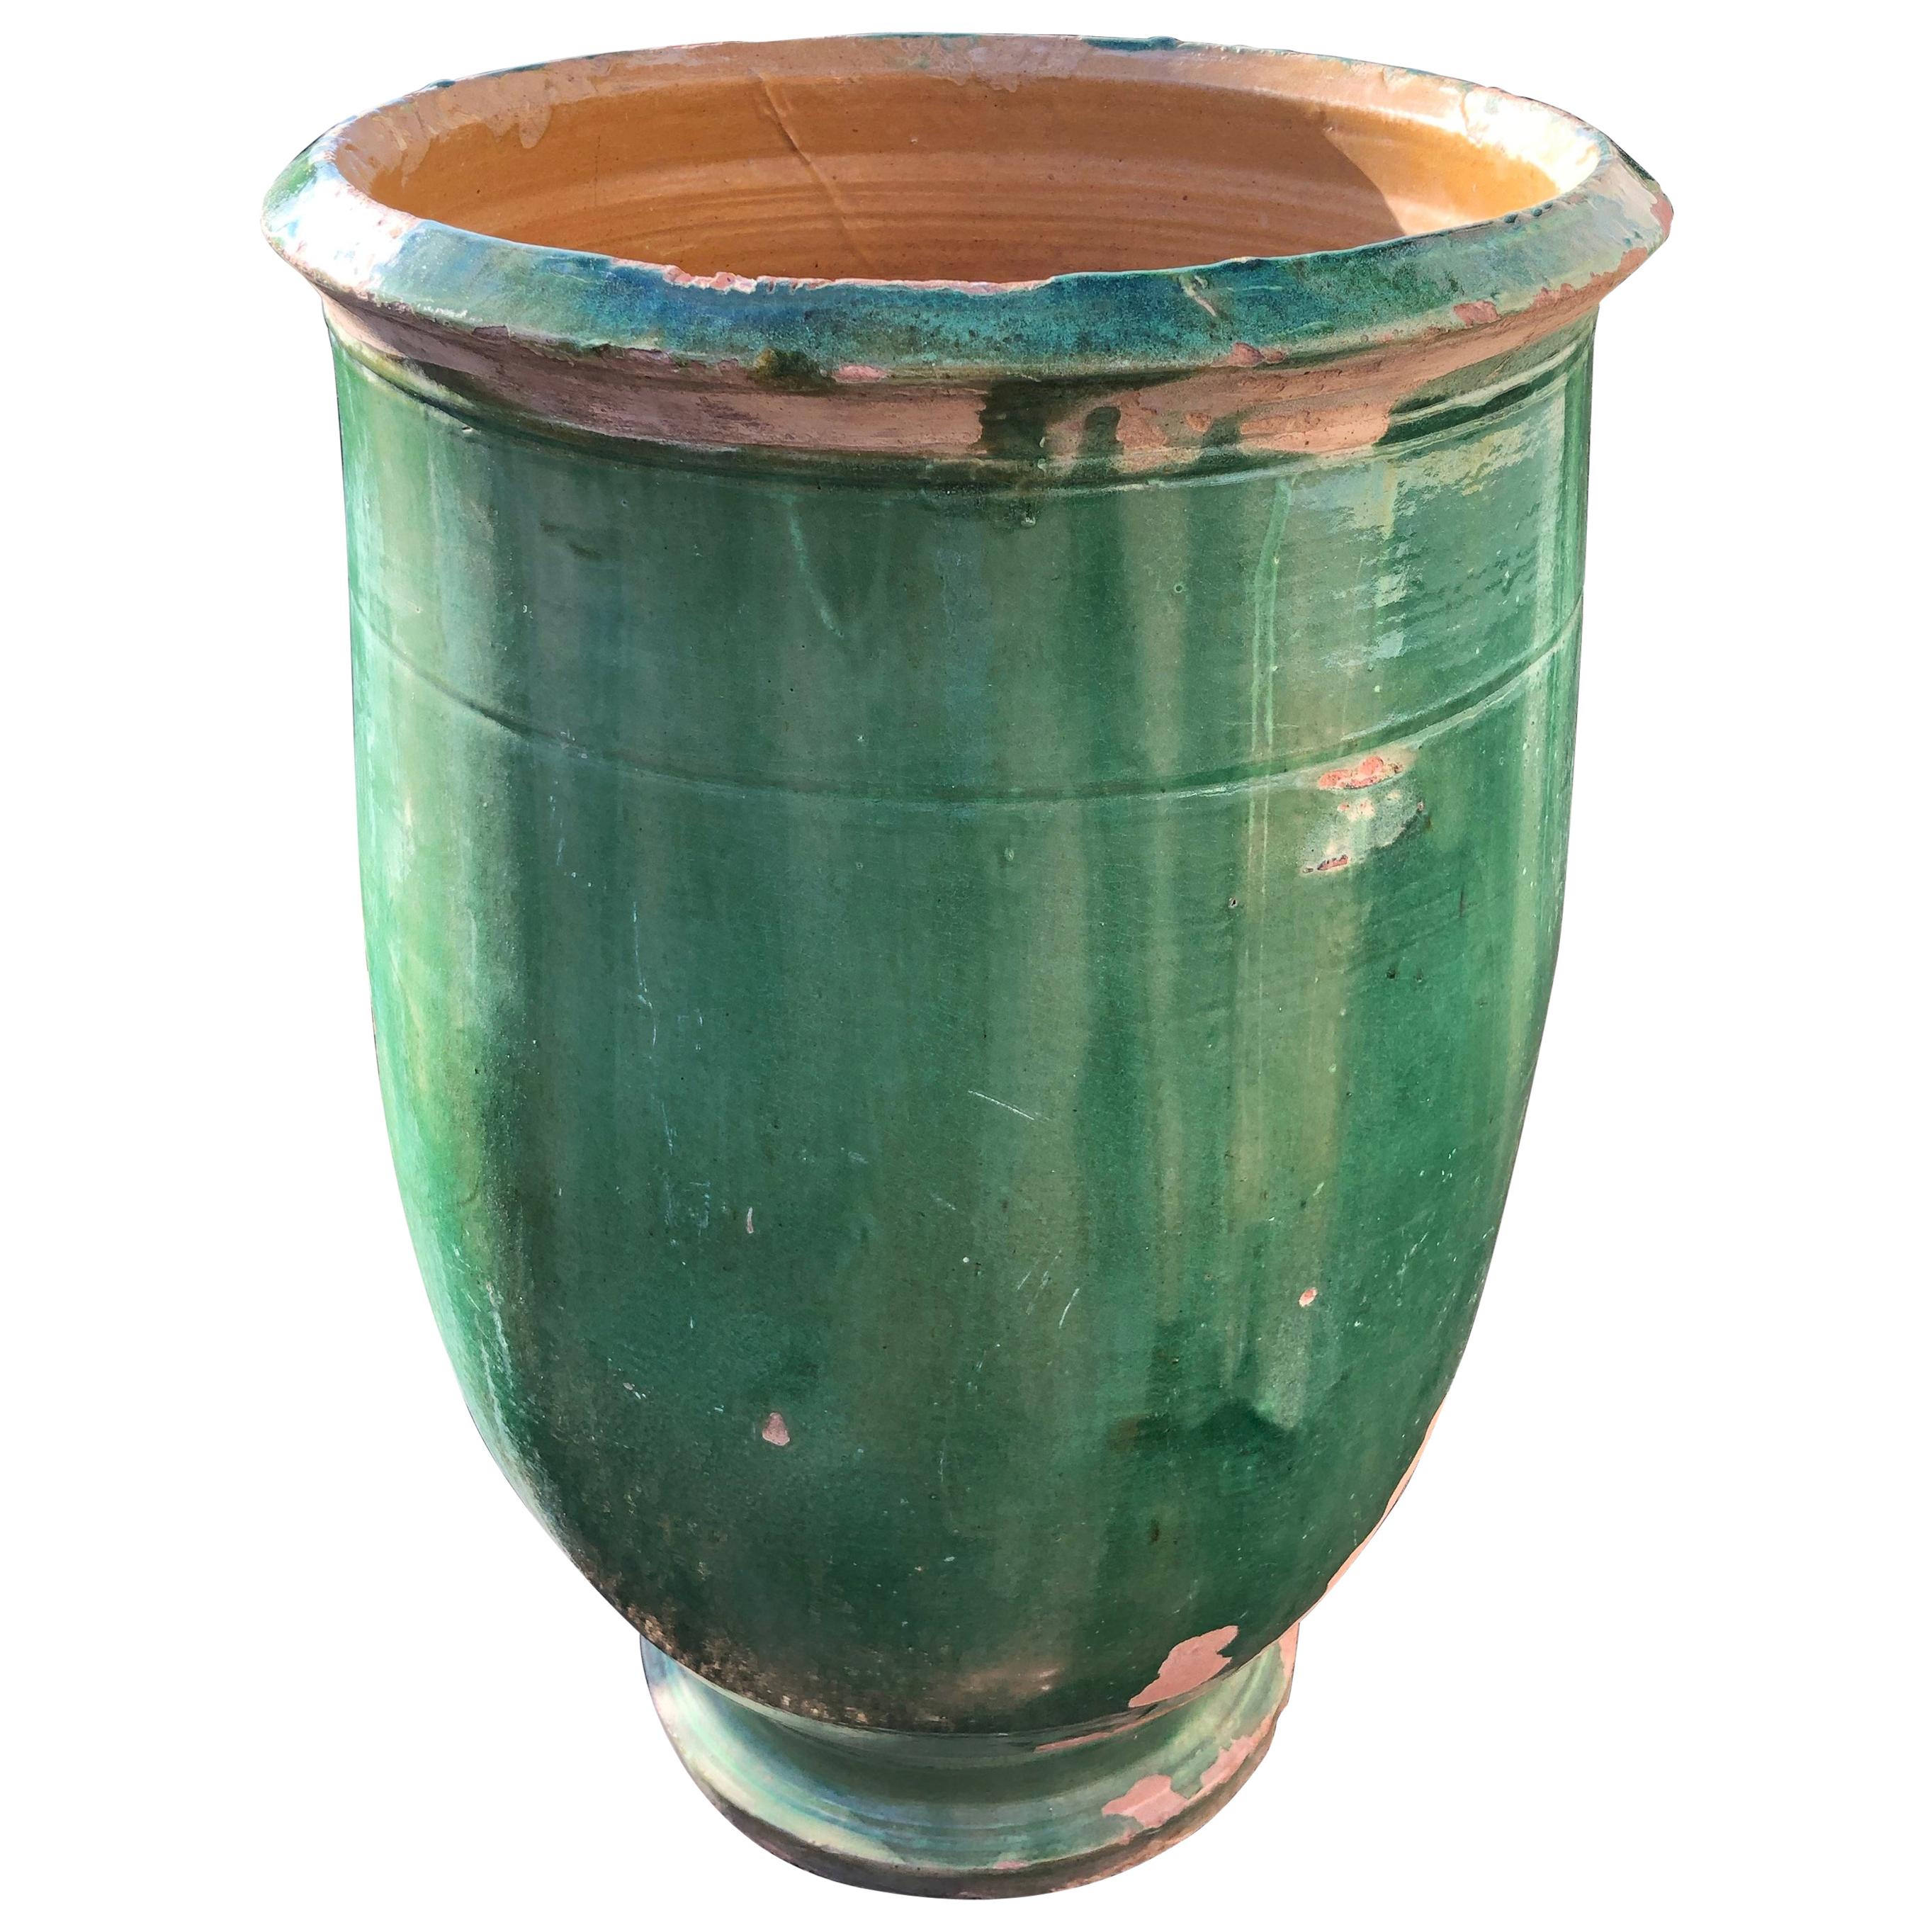 French 19th Century Green-Glazed Terracotta Pot from Apt